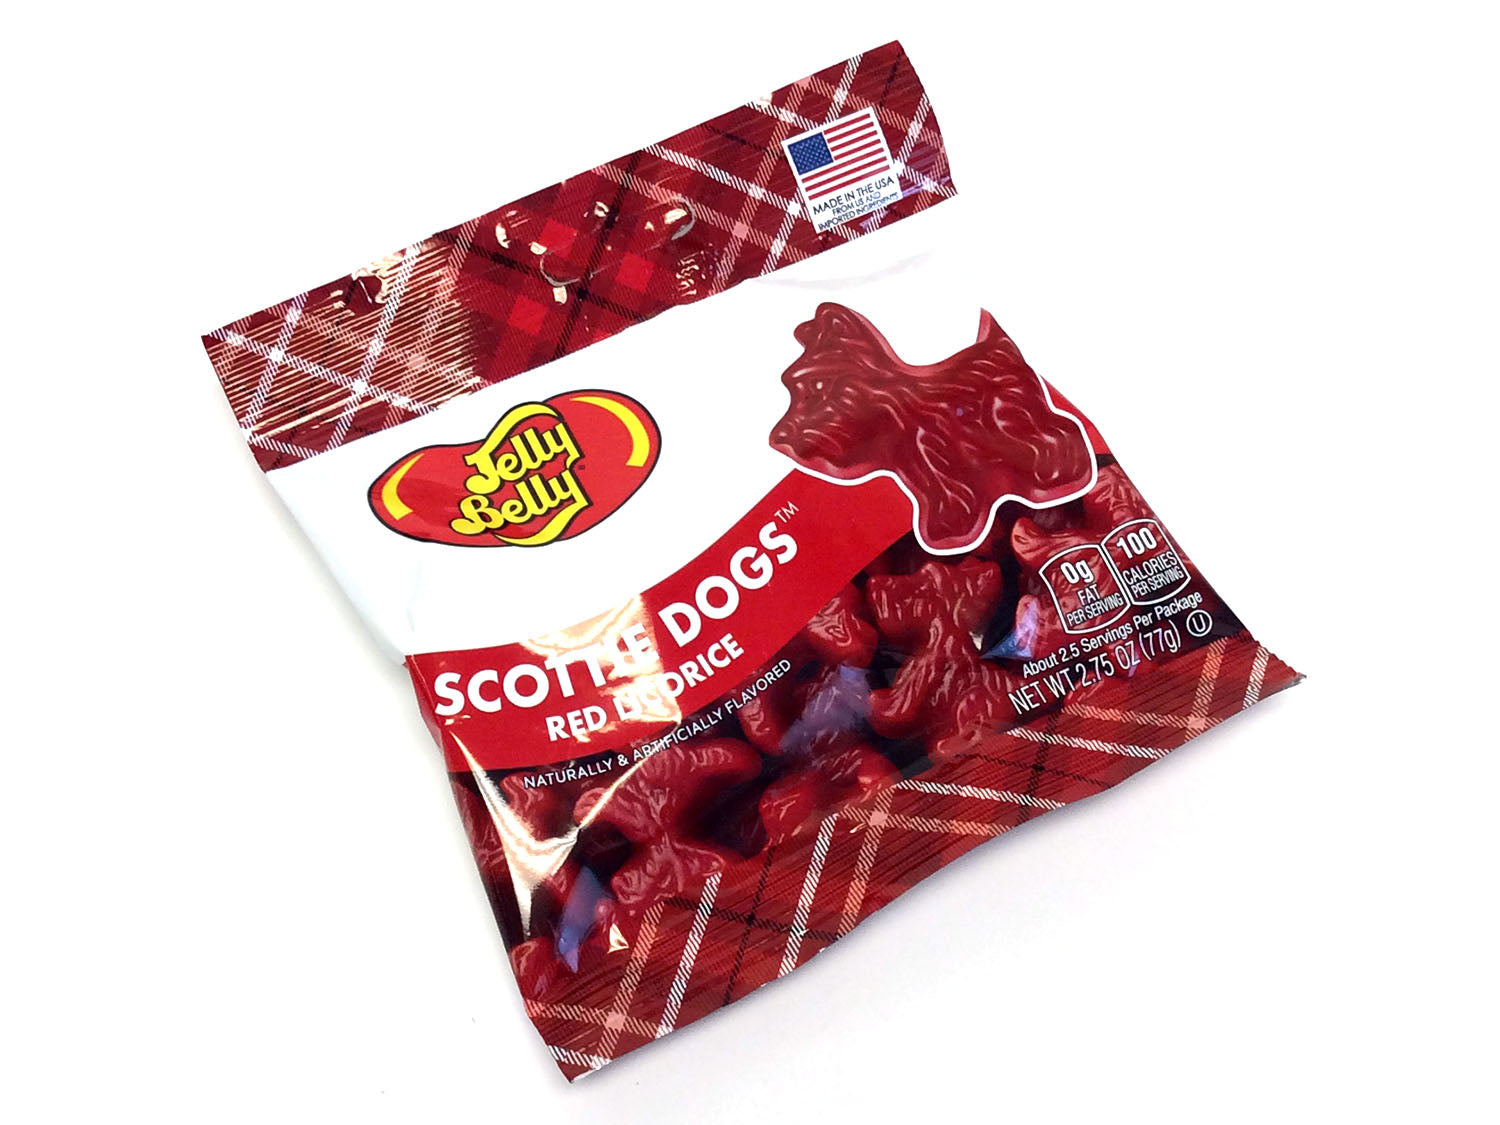 Scottie Dogs - Red Licorice - 2.75 oz bag